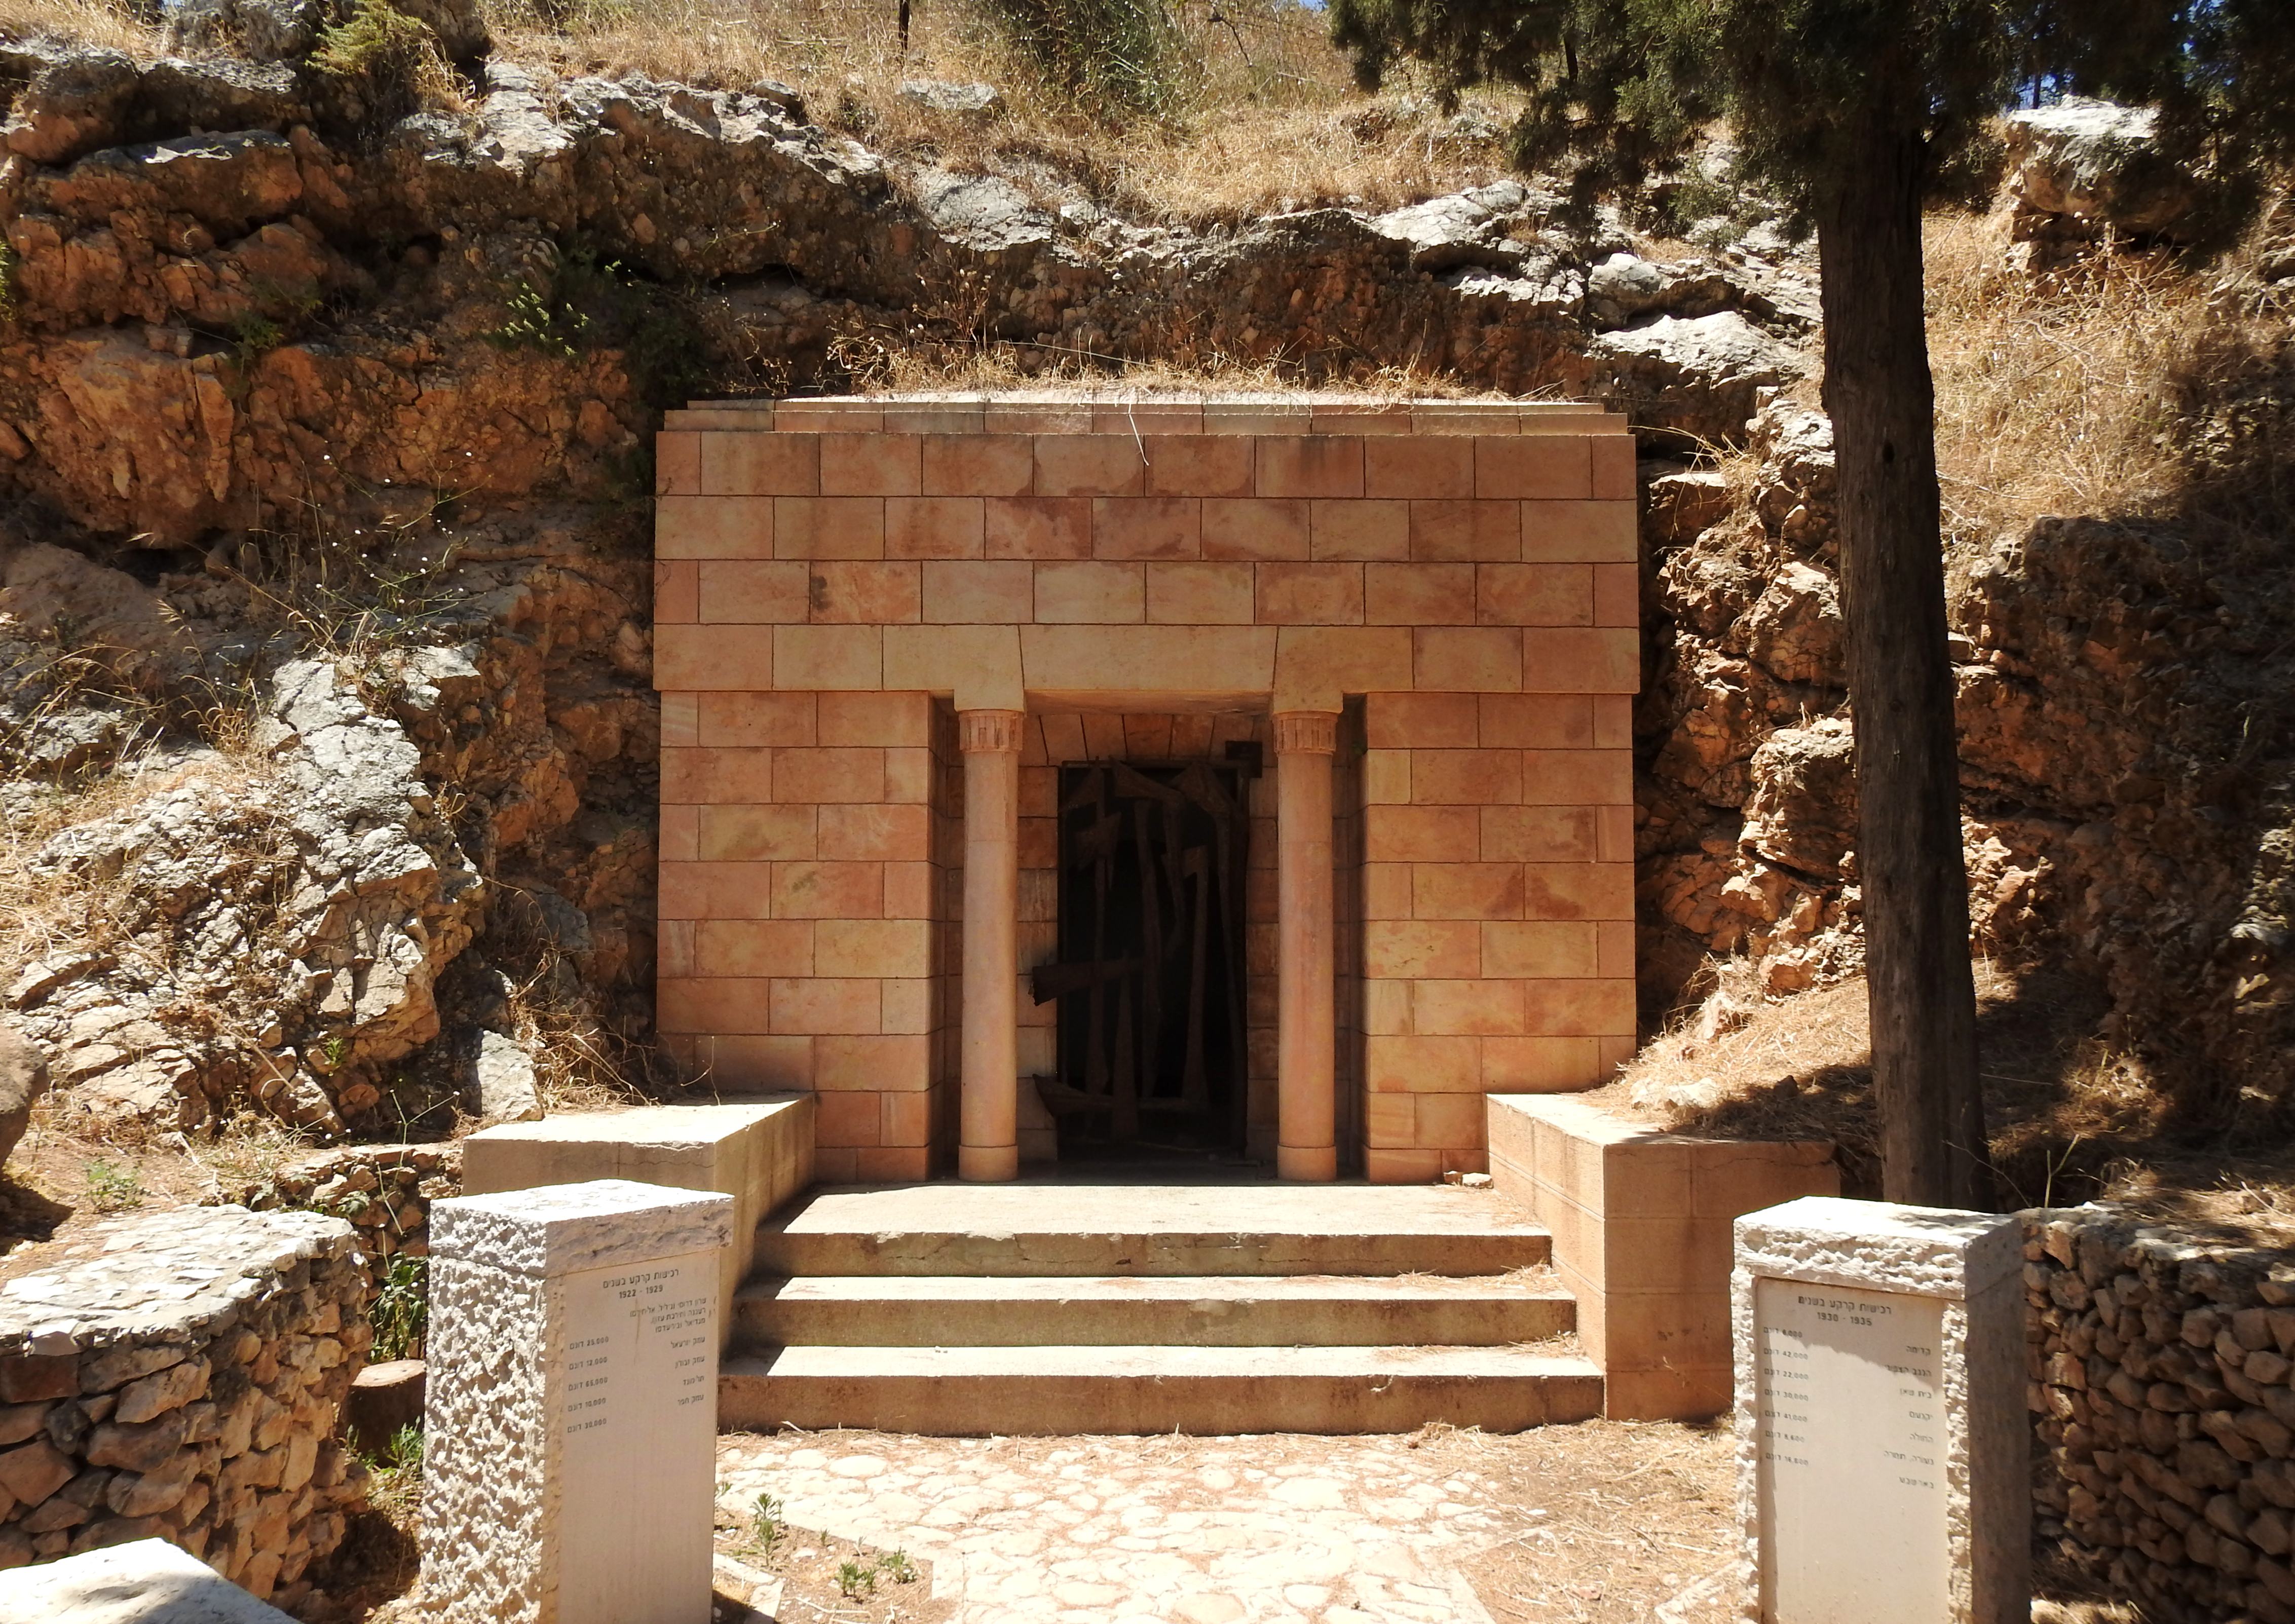 The Hankin tomb